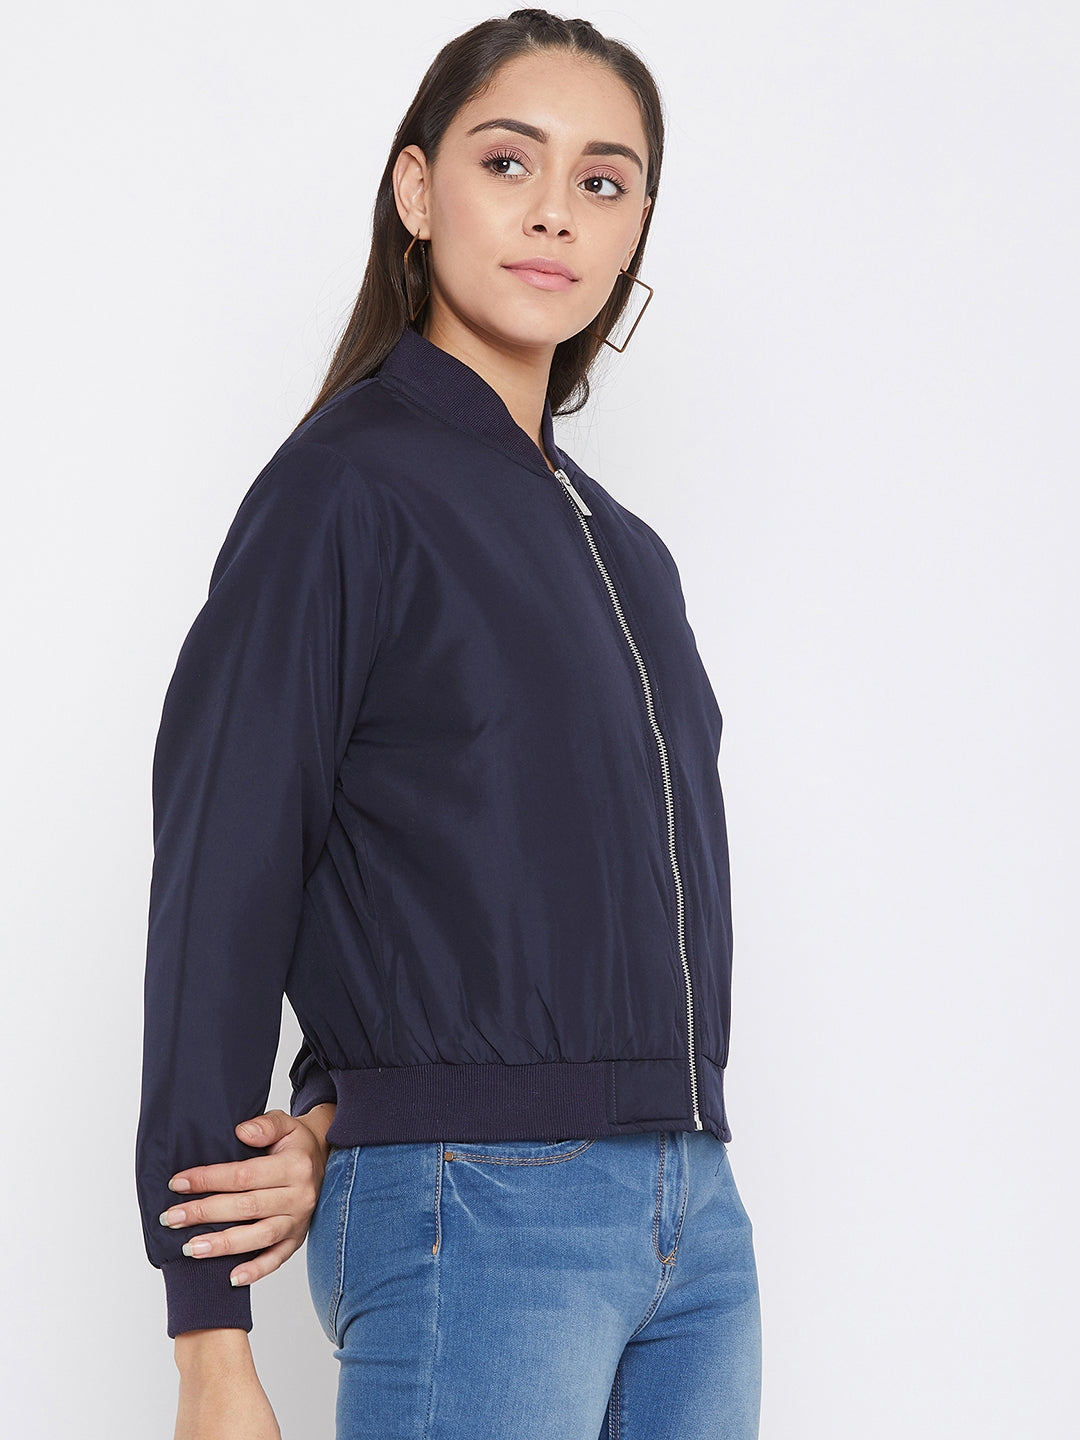 Full Sleeves Slim Fit Jacket - Women Jackets